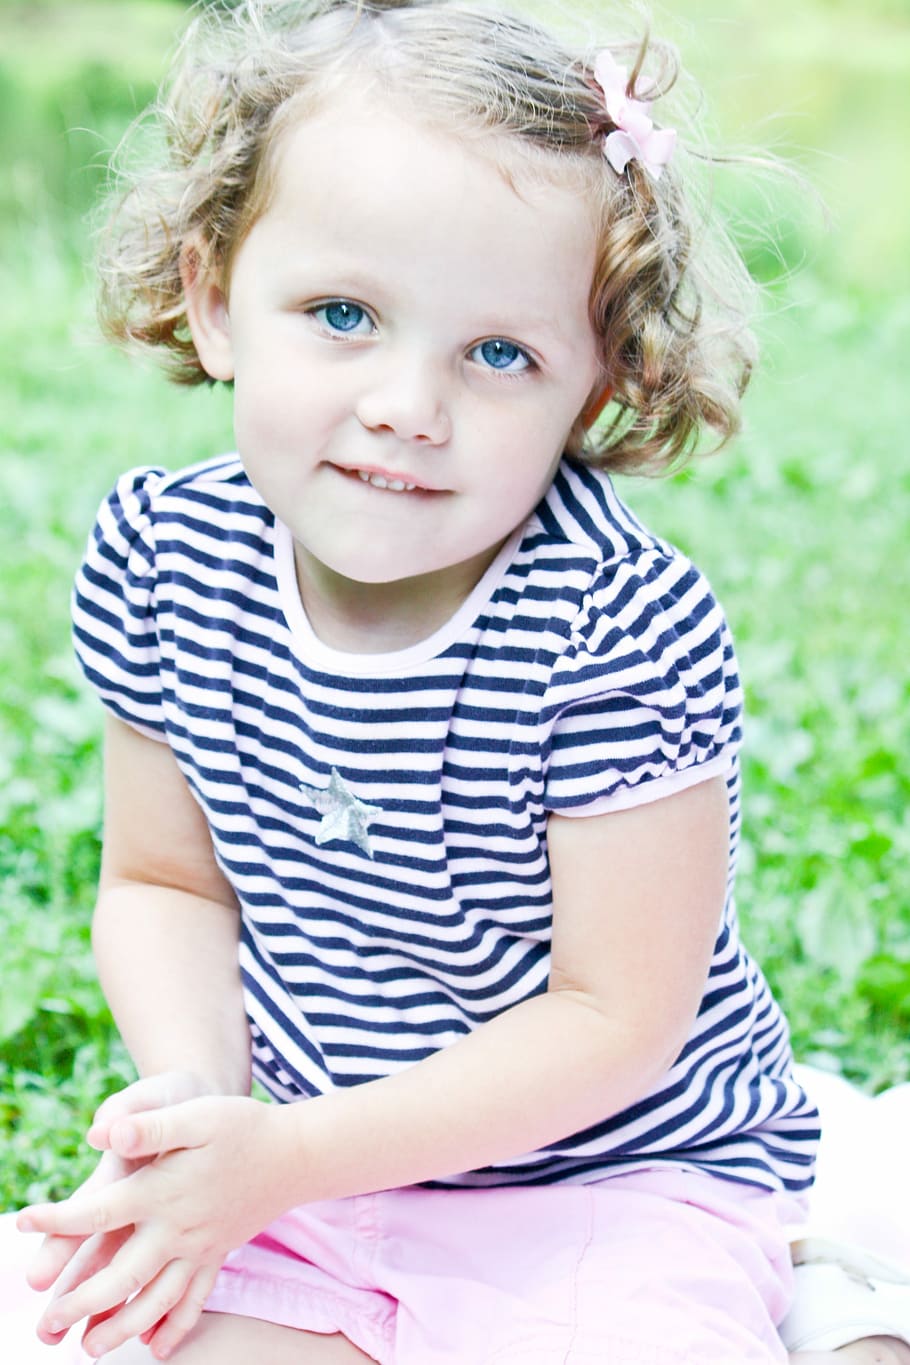 Little Girl, Blue, Blue Eyes, Child, little girl, girl, kid, cute, adorable, curly hair, caucasian